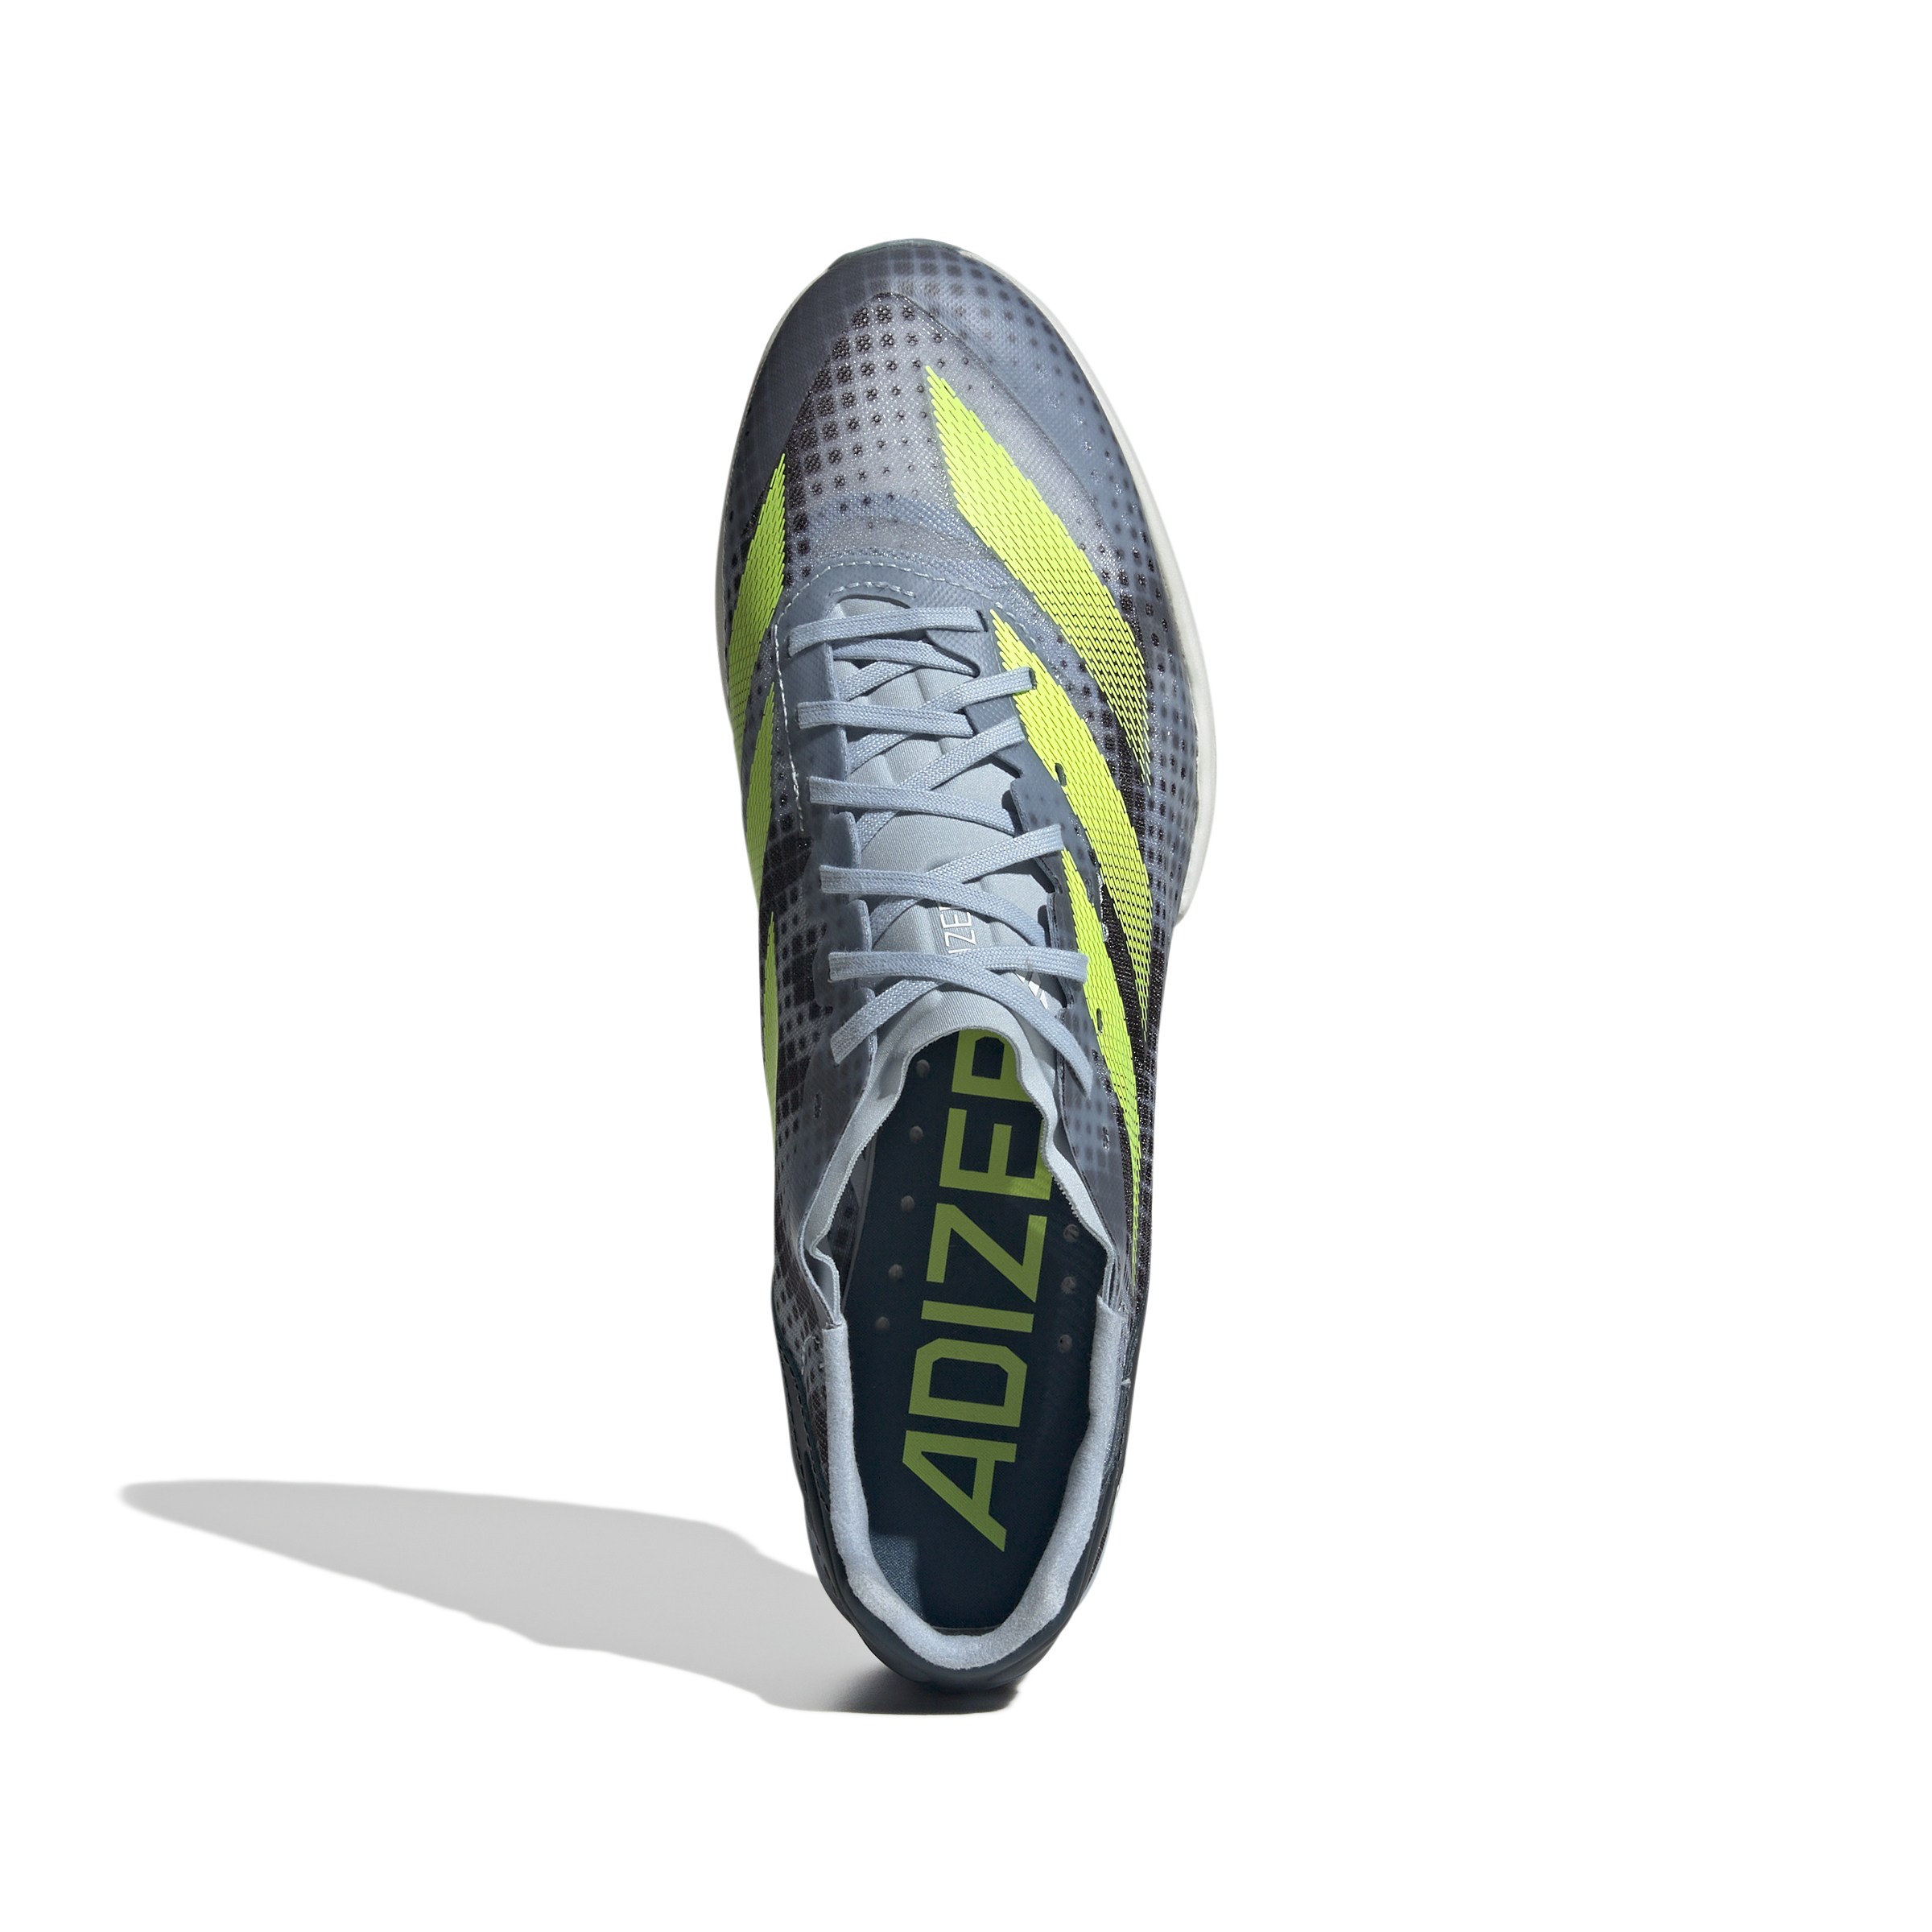 adidas Performance Adizero Prime Sp Athletics Chaussures Mixte Adulte Witte  43 1/3